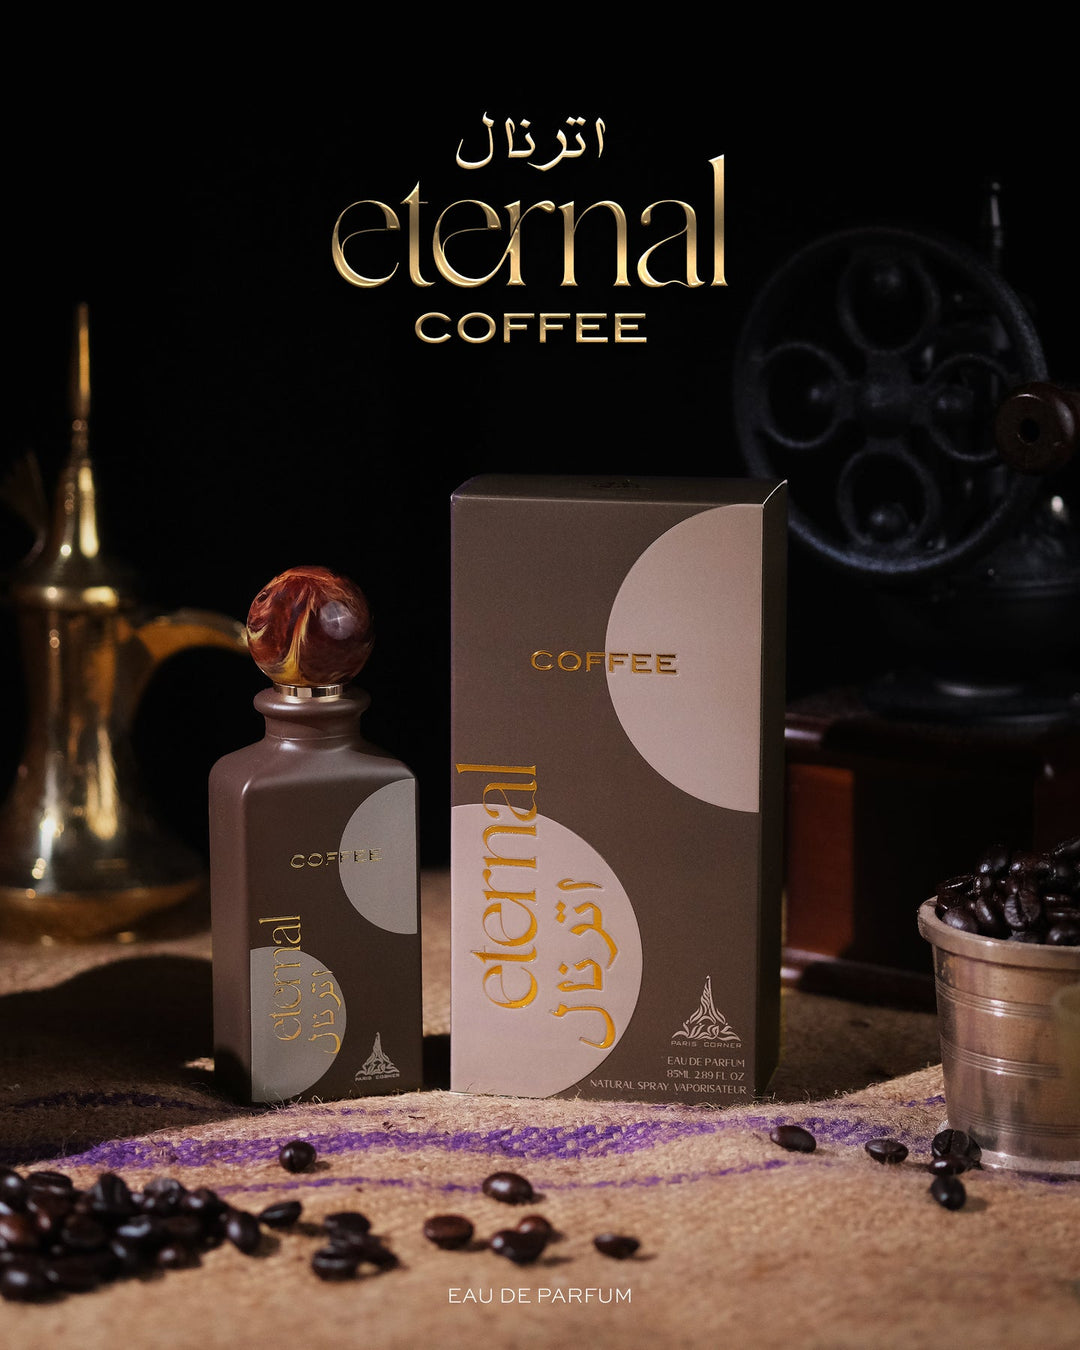 Eternal coffee - Perfume Parlour